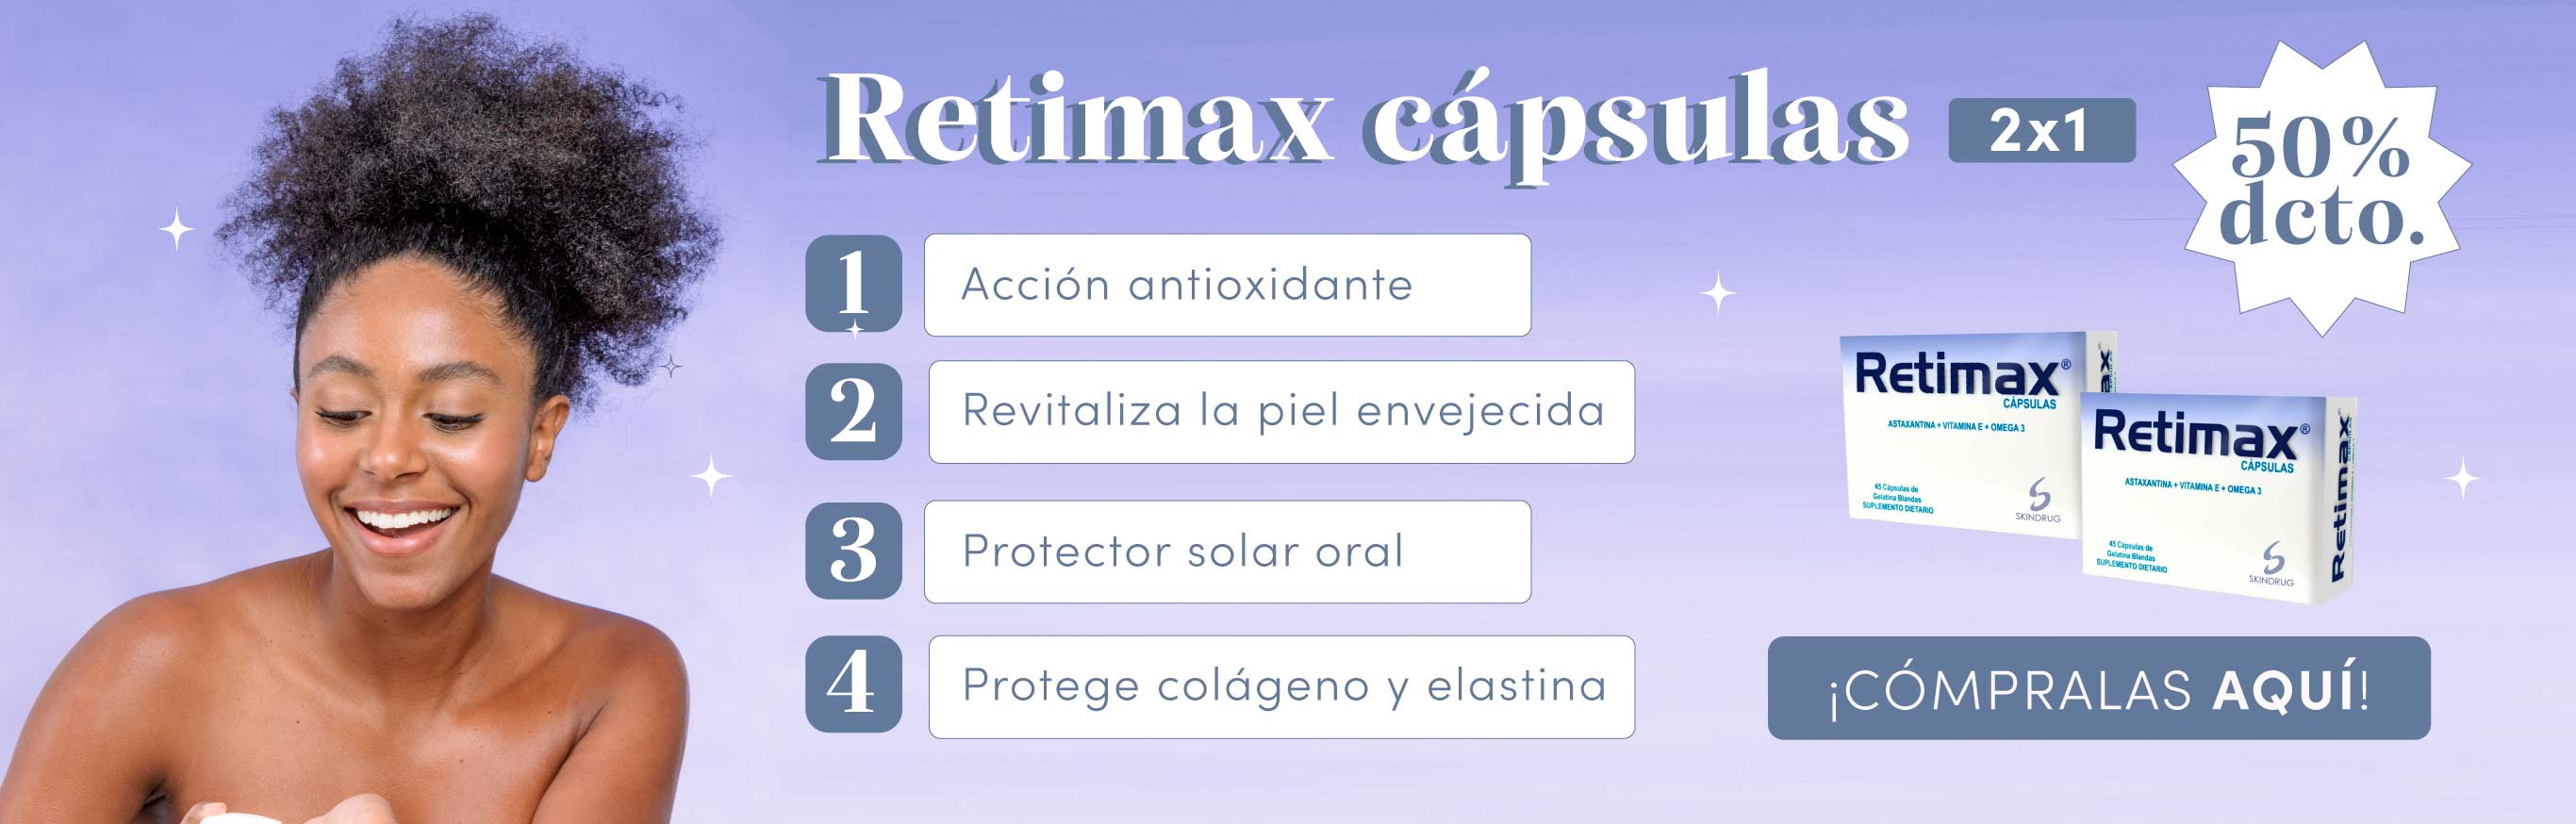 retimax2x1